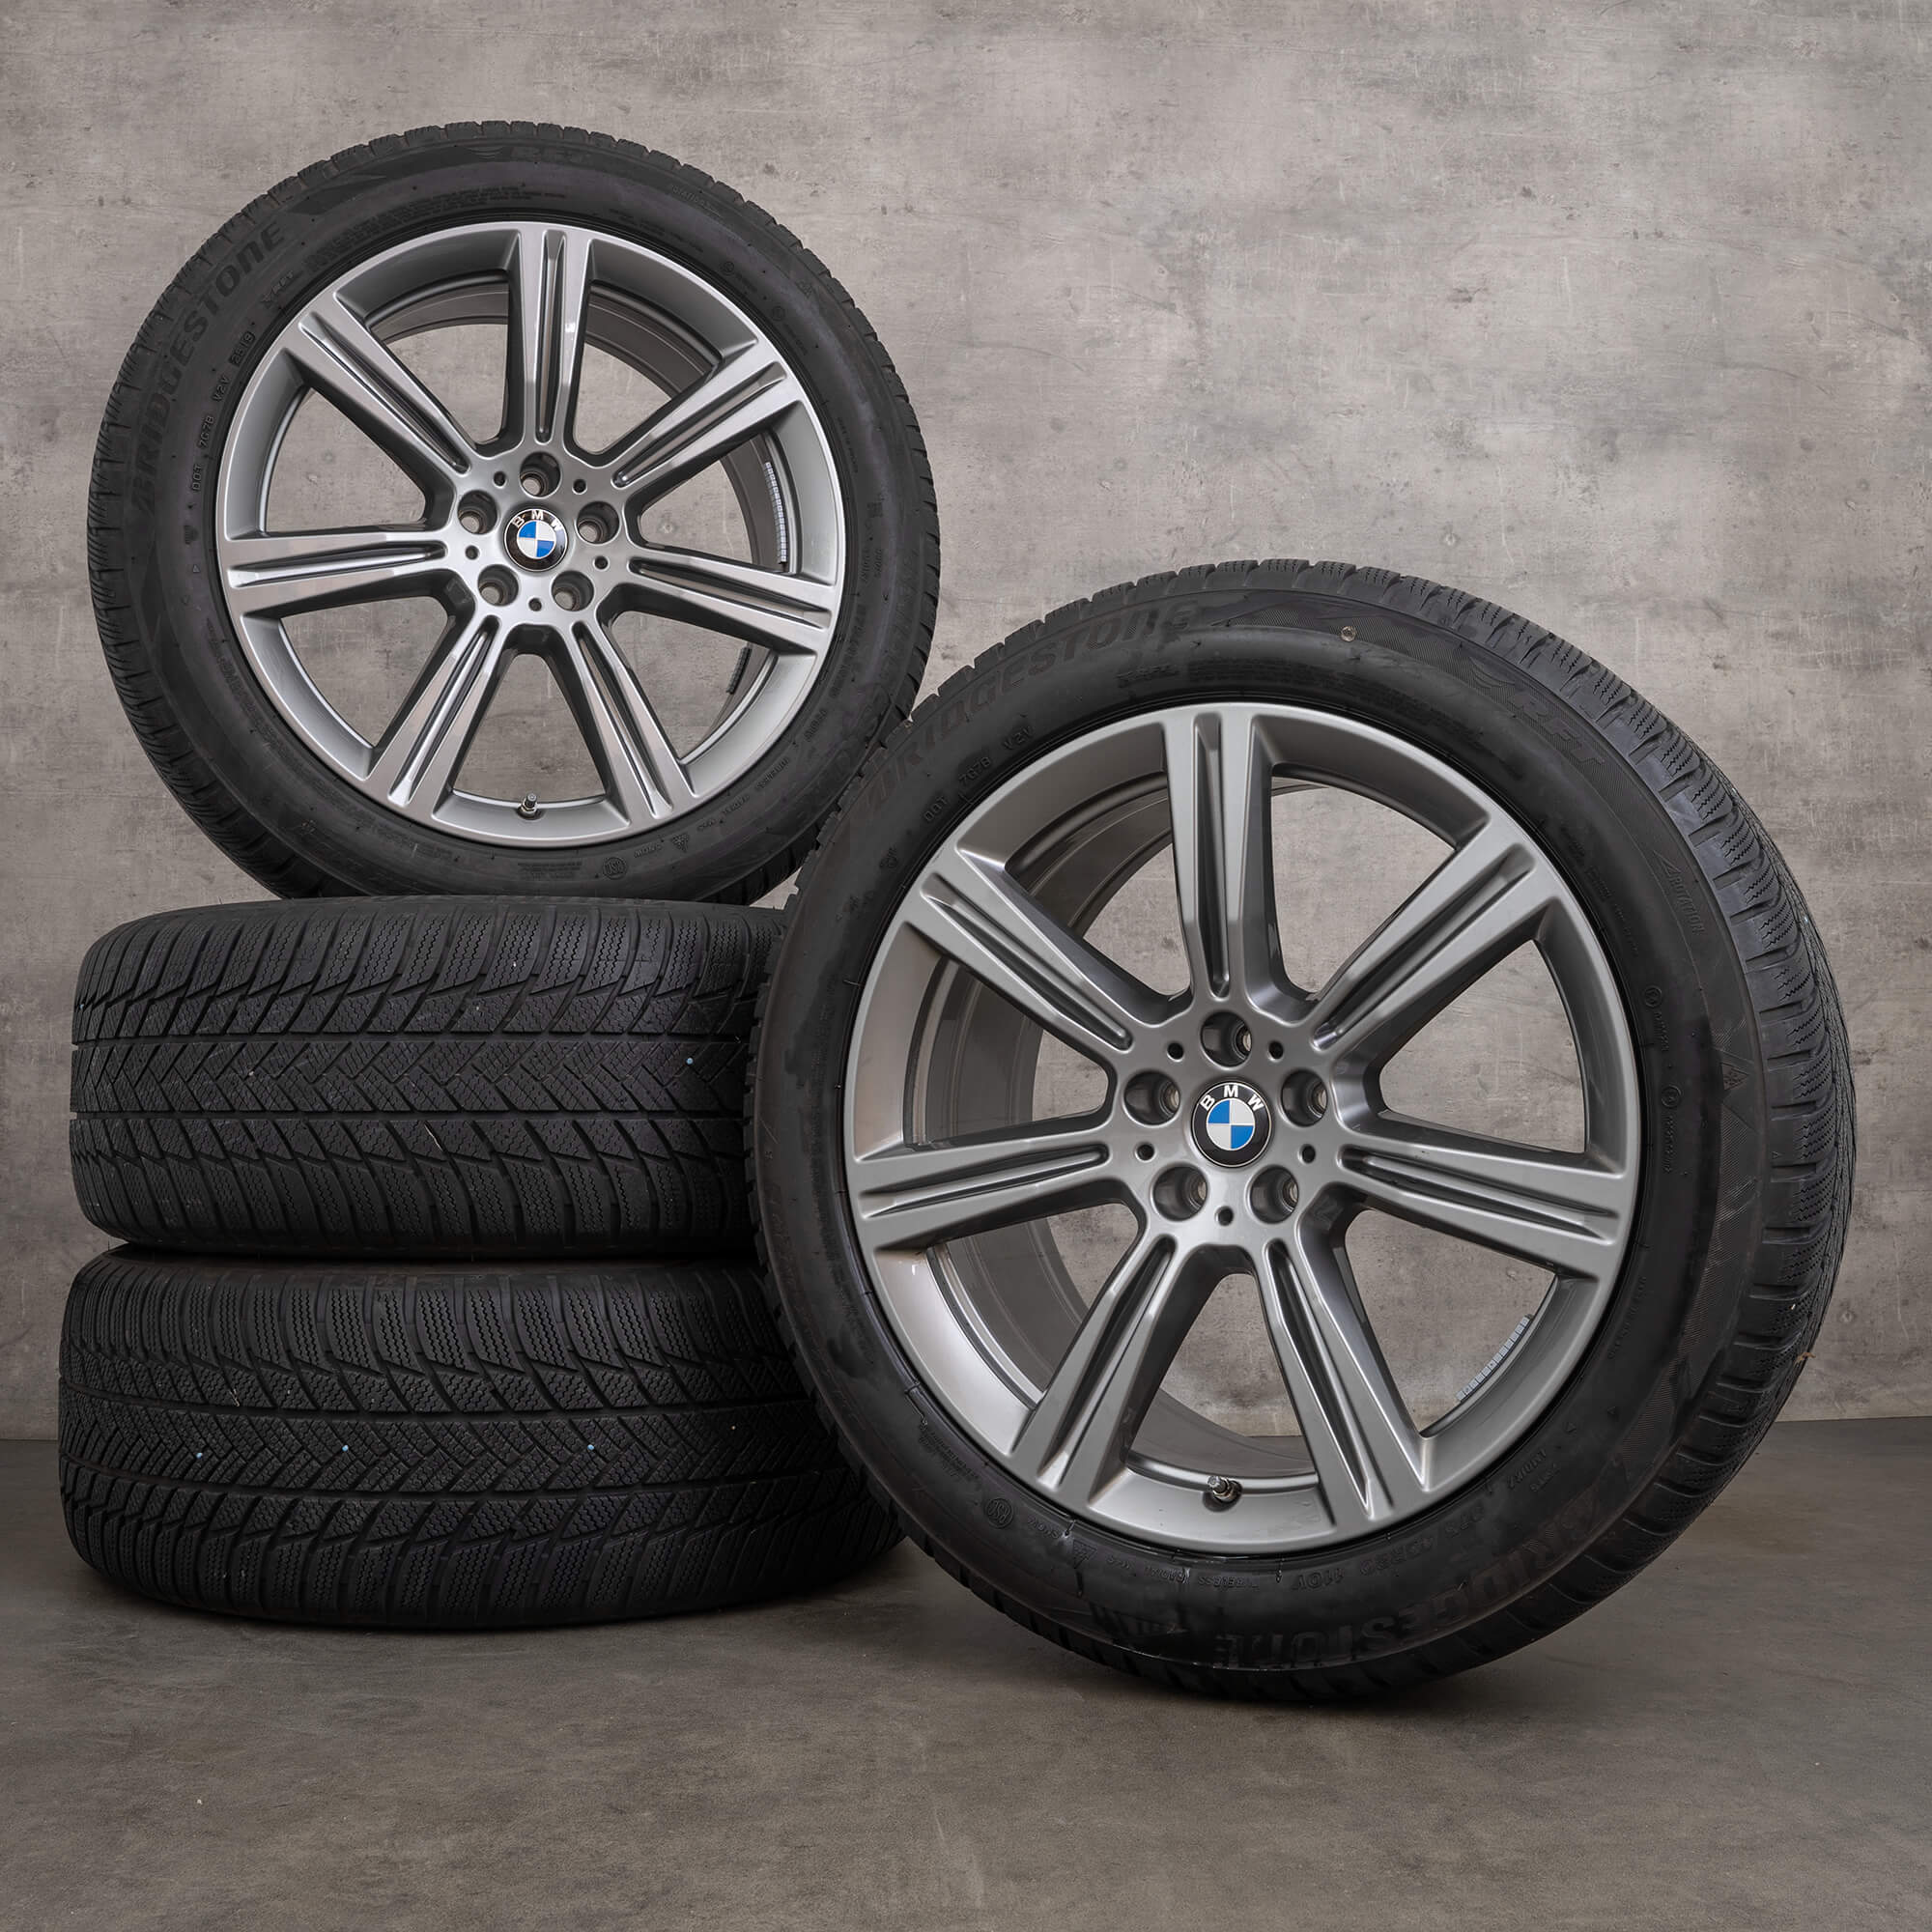 BMW X5 G05 X6 G06 ruedas completas de invierno neumáticos llantas 20 pulgadas